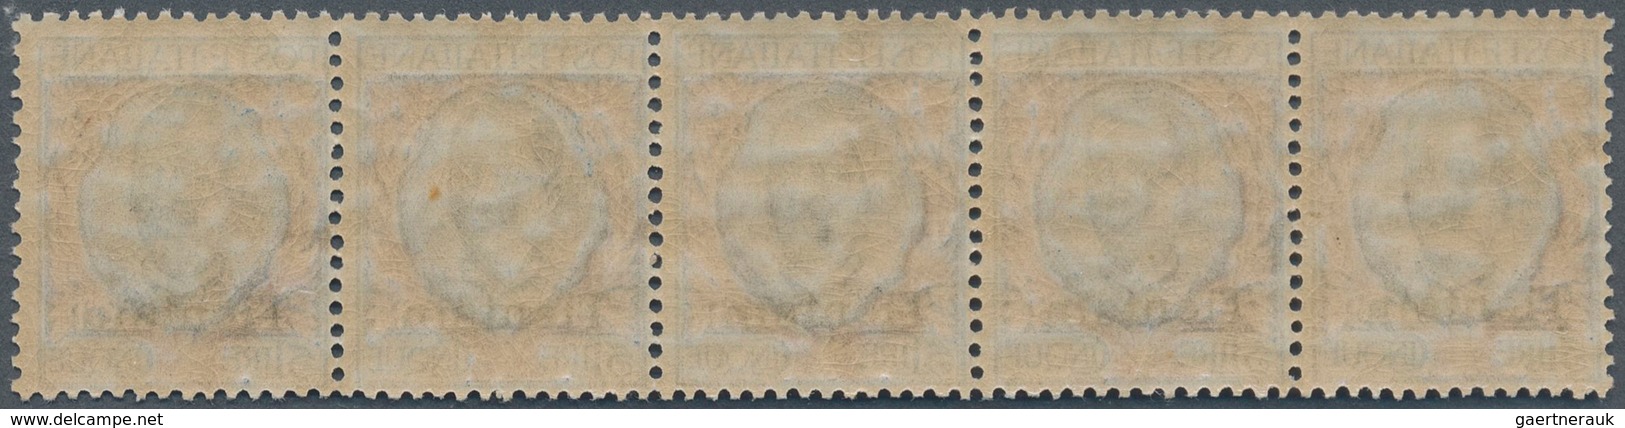 Italienische Post In China: 1917, Tientsin 5l. Ultramarine/rose, Horizontal Strip Of Five, Fresh Col - Tientsin